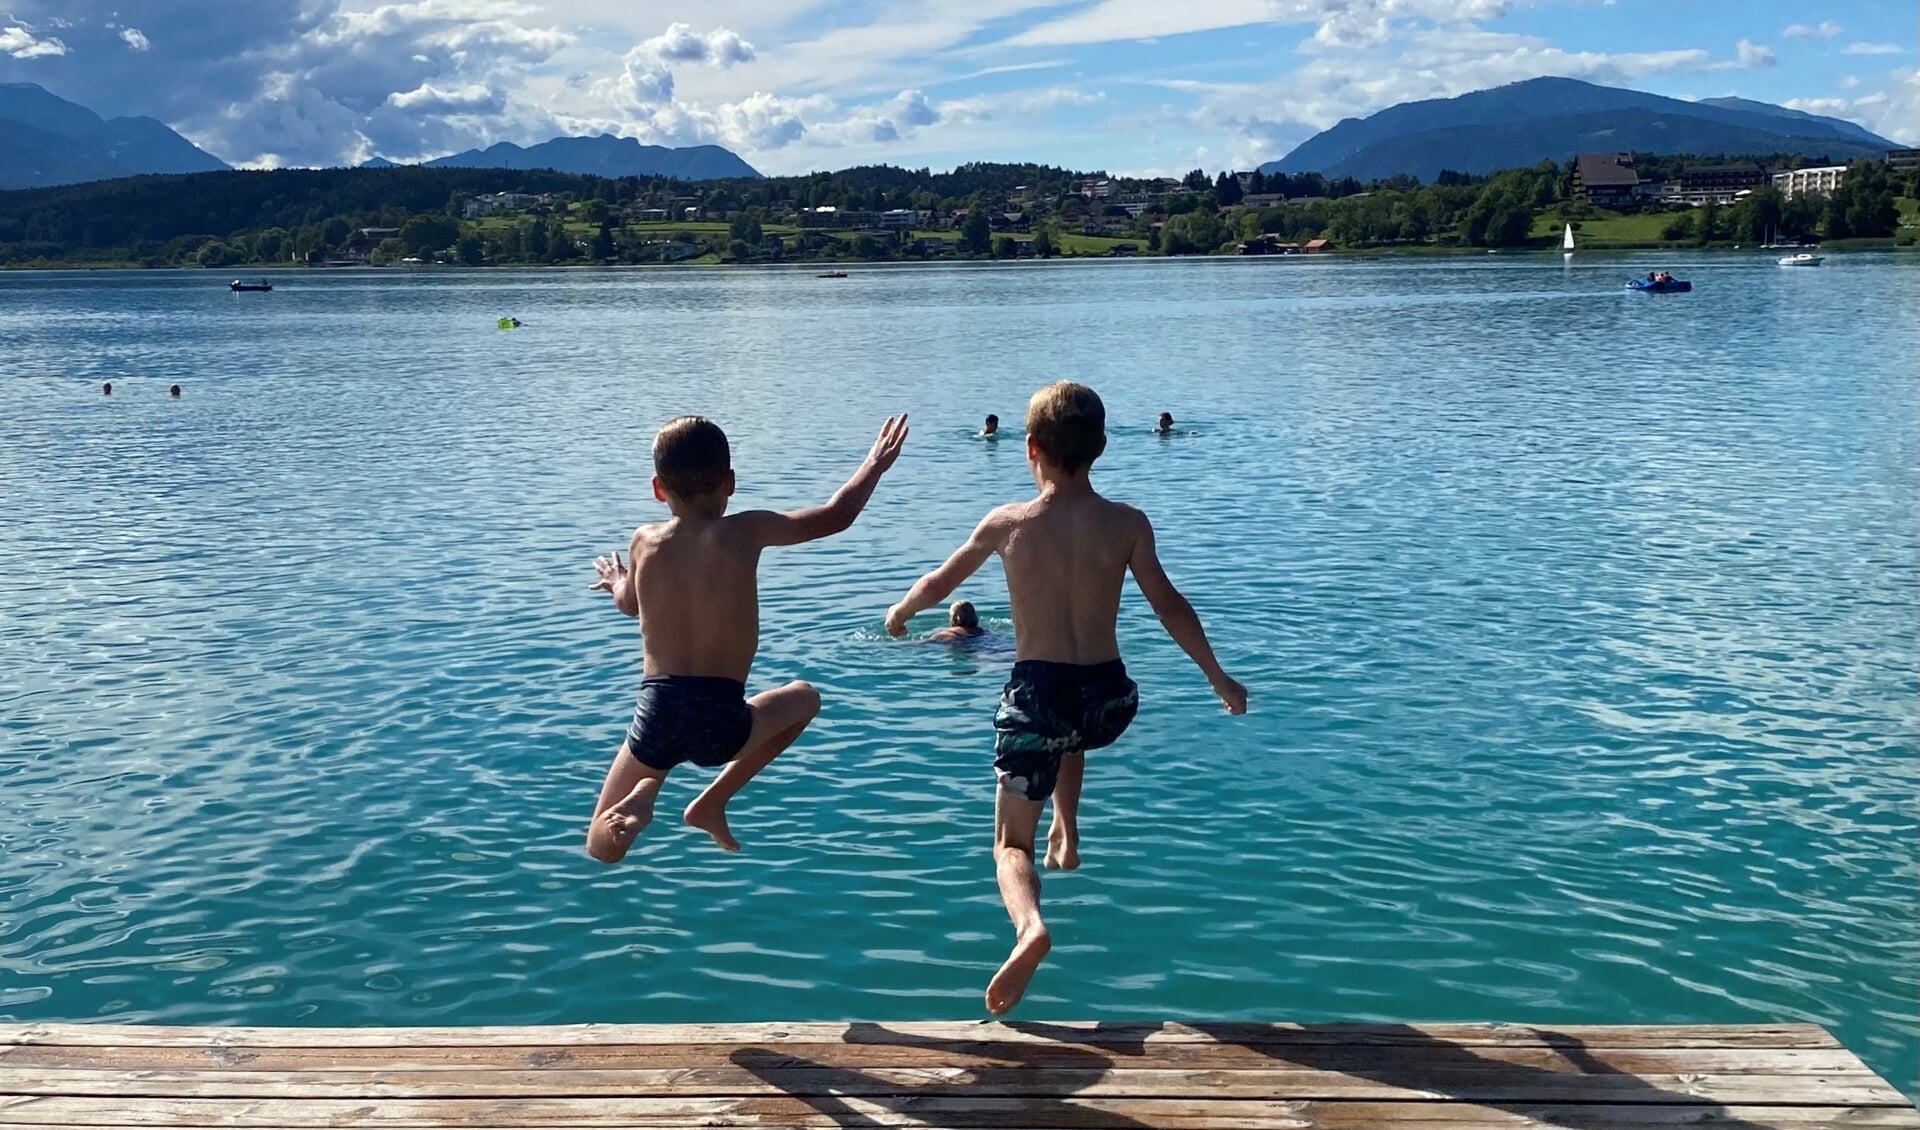 Siem en Jort springen in de Faaker See, Oostenrijk. Yvonne van Roosmalen